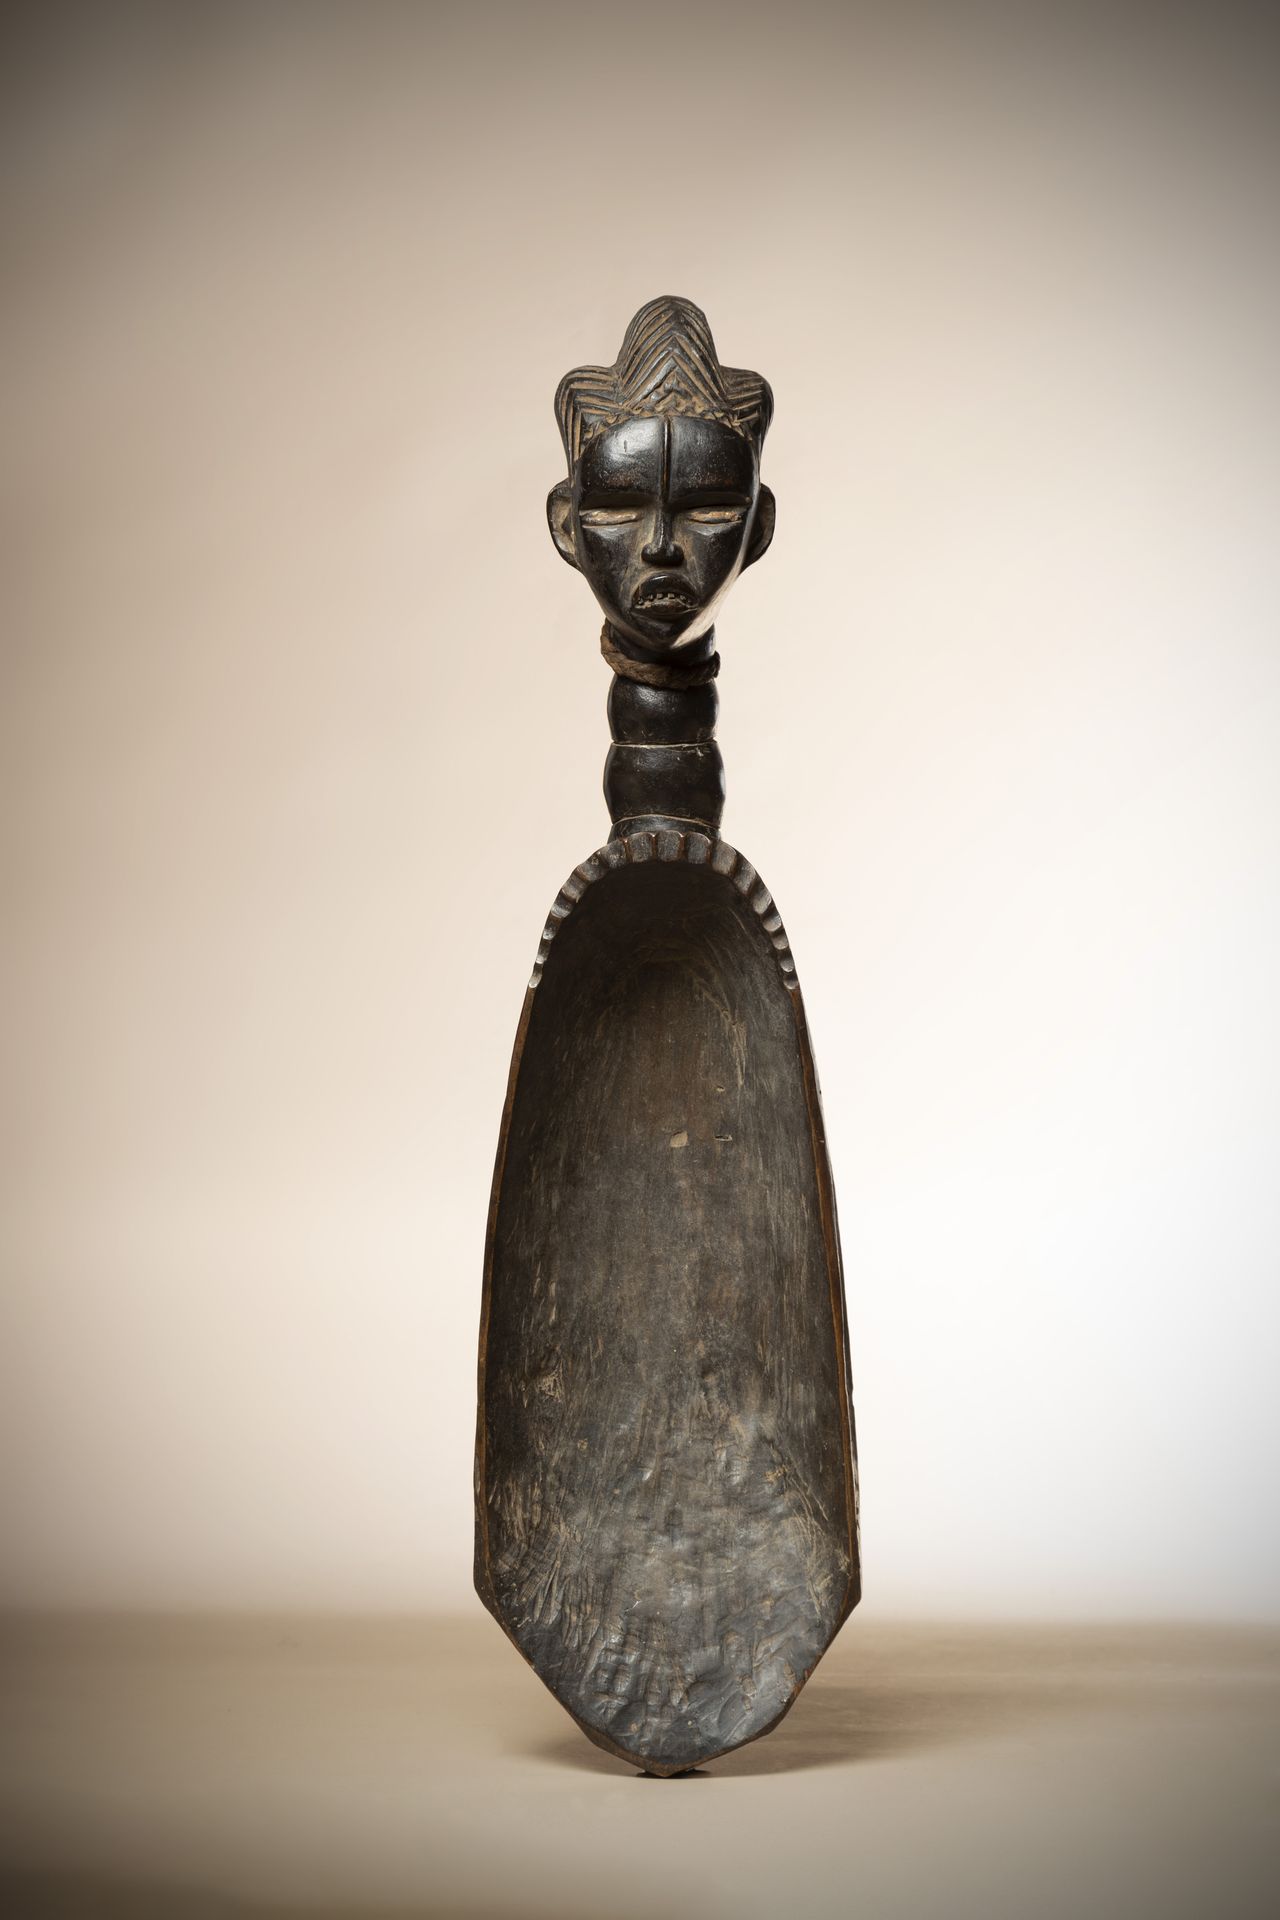 Null DAN (象牙海岸)

装饰有戴着三壳头饰的美丽女性头像的仪式性米铲

前阿兰-普罗沃特收藏

高度：57厘米